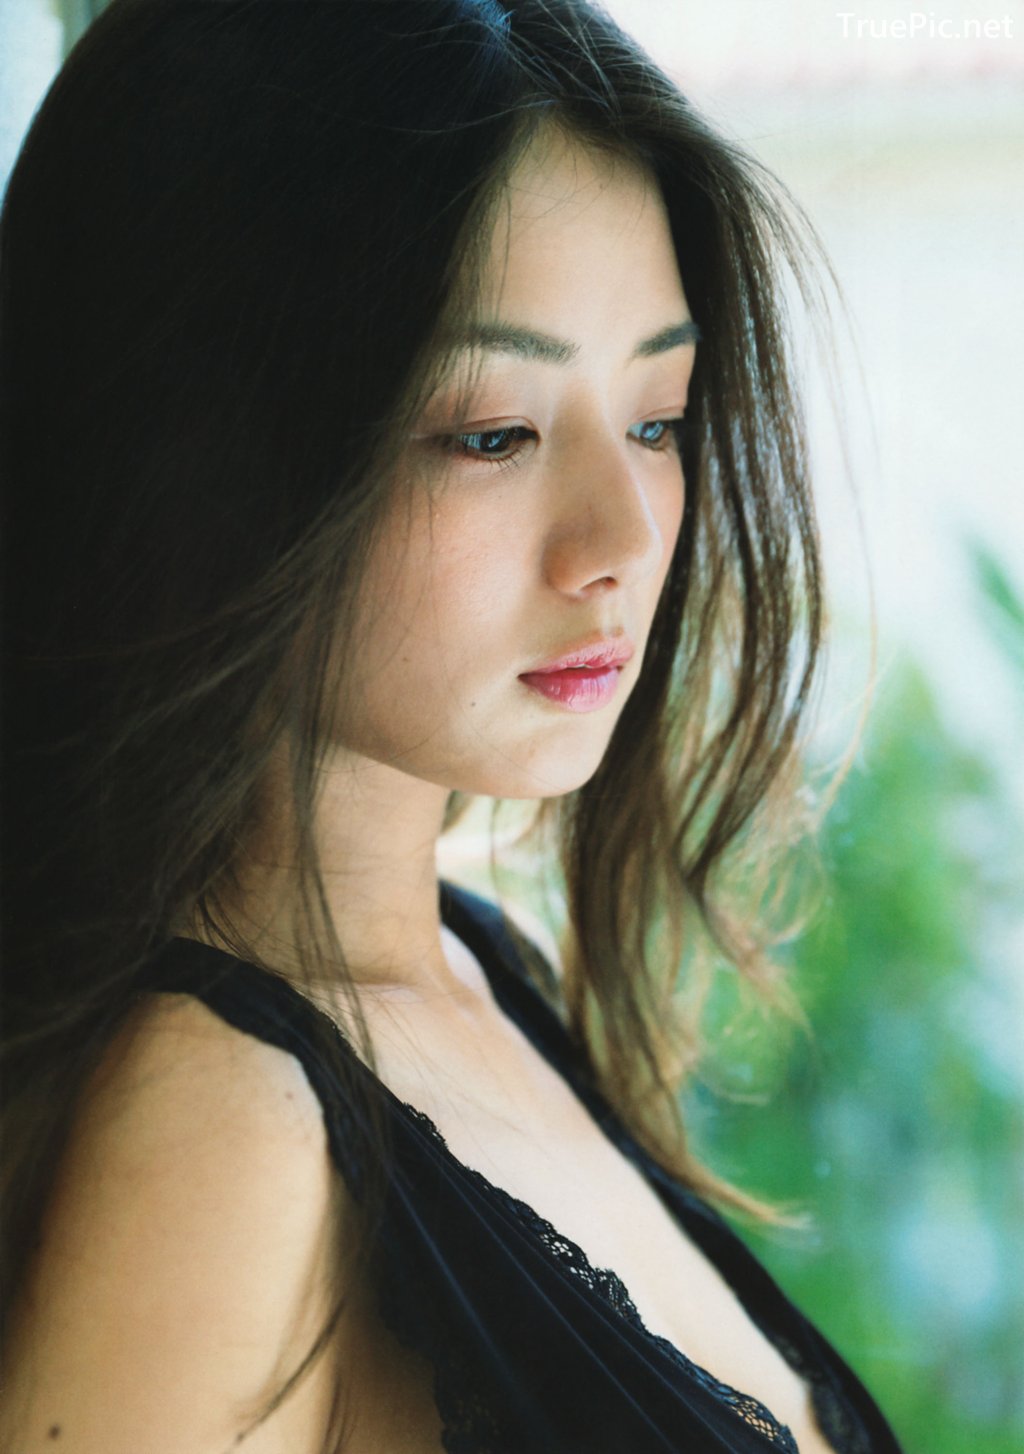 Image-Japanese-Actress-Gravure-Idol-Moemi-Katayama-Mermaid-From-Tokyo-Japan-TruePic.net- Picture-14